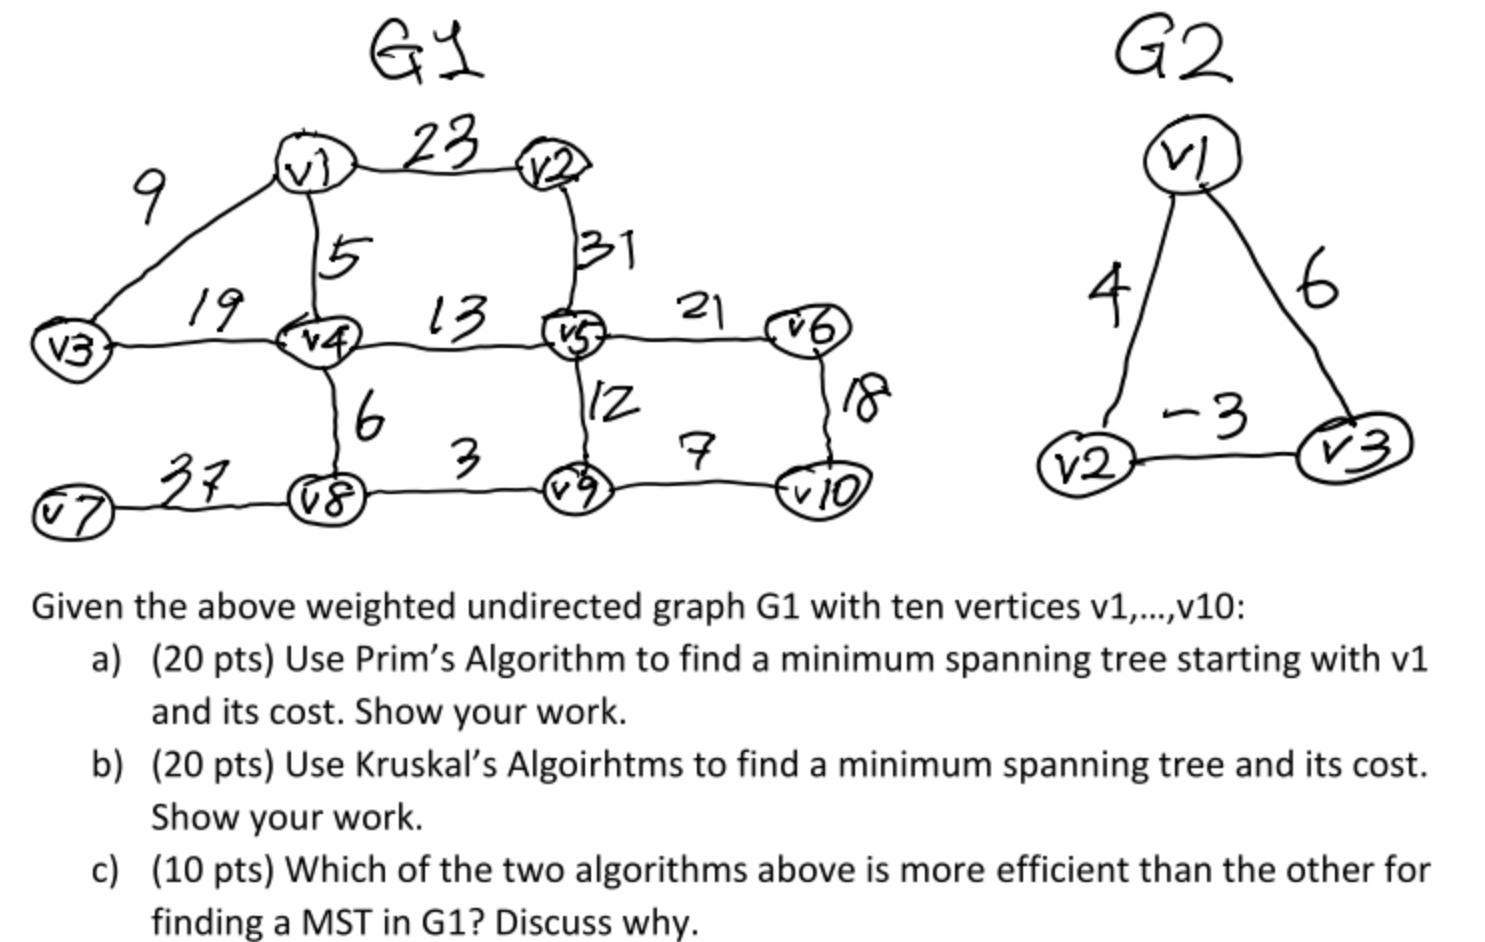 V3 9 19 37 4)  23 6 18 13 3 v2 131 12 21 7 V10 G2 VI 4 V2 - 6 Given the above weighted undirected graph G1